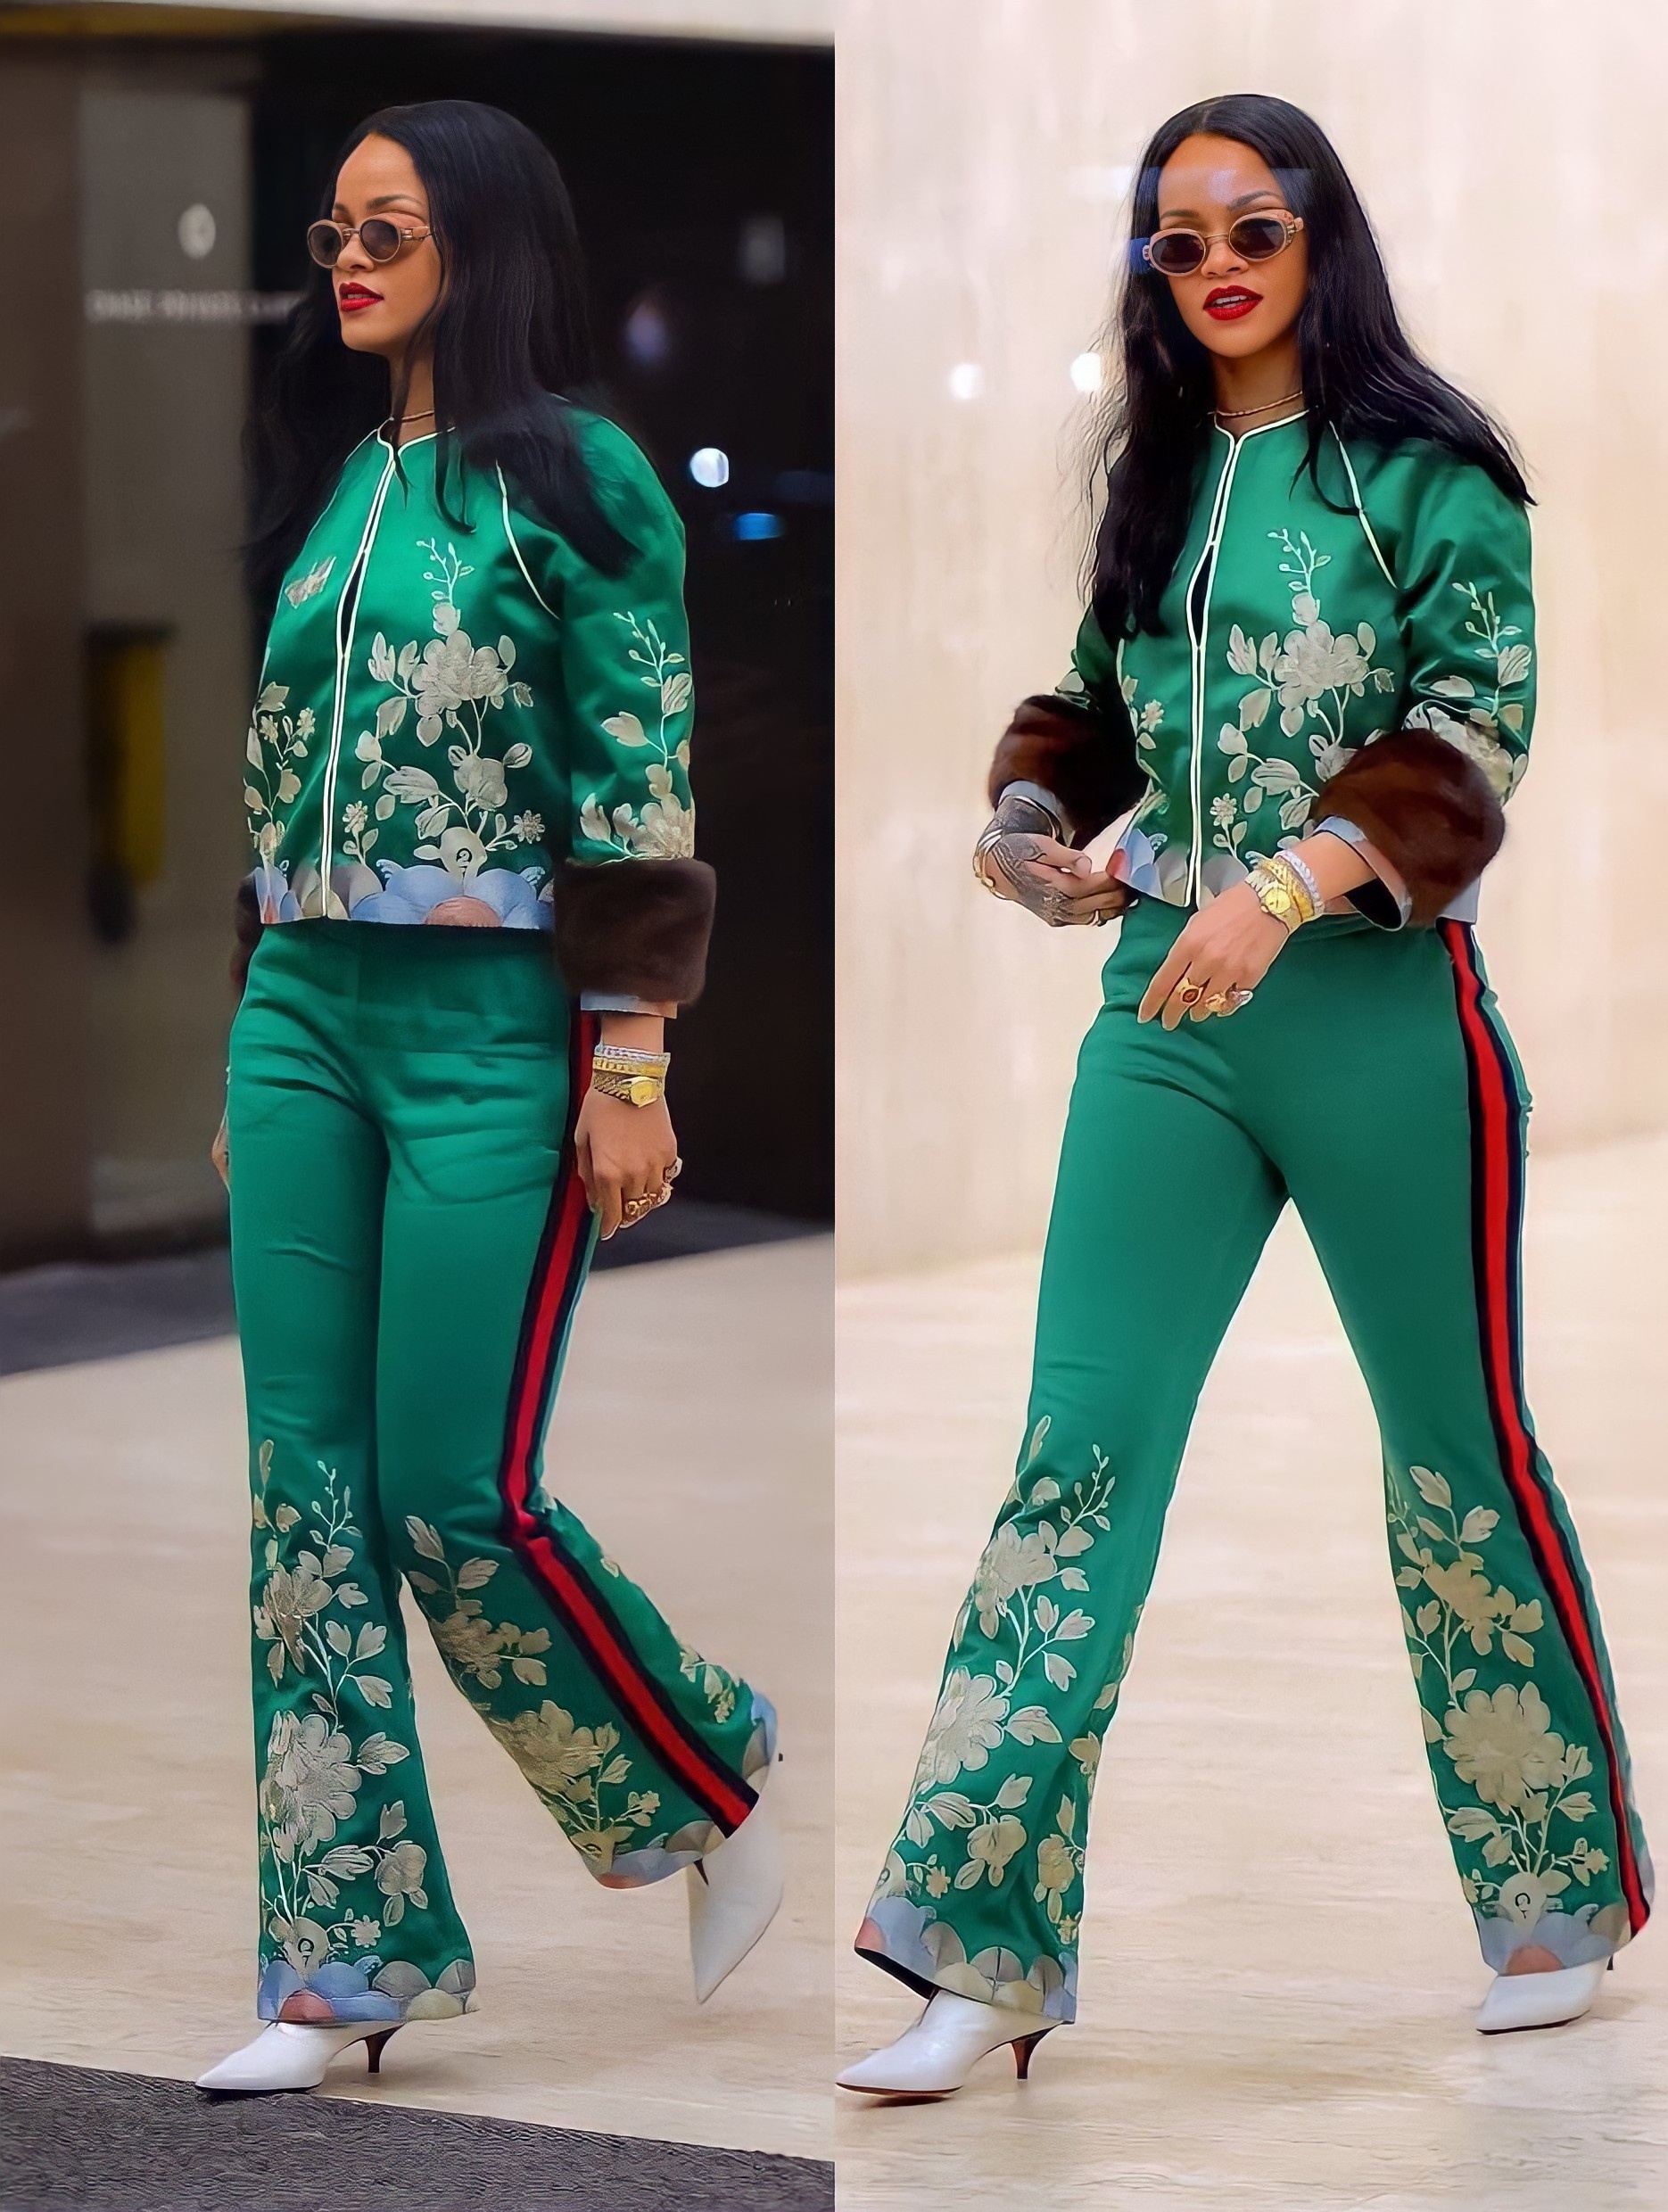 rihanna on "Rihanna in emerald green duchesse silk embroidered tracksuit / X